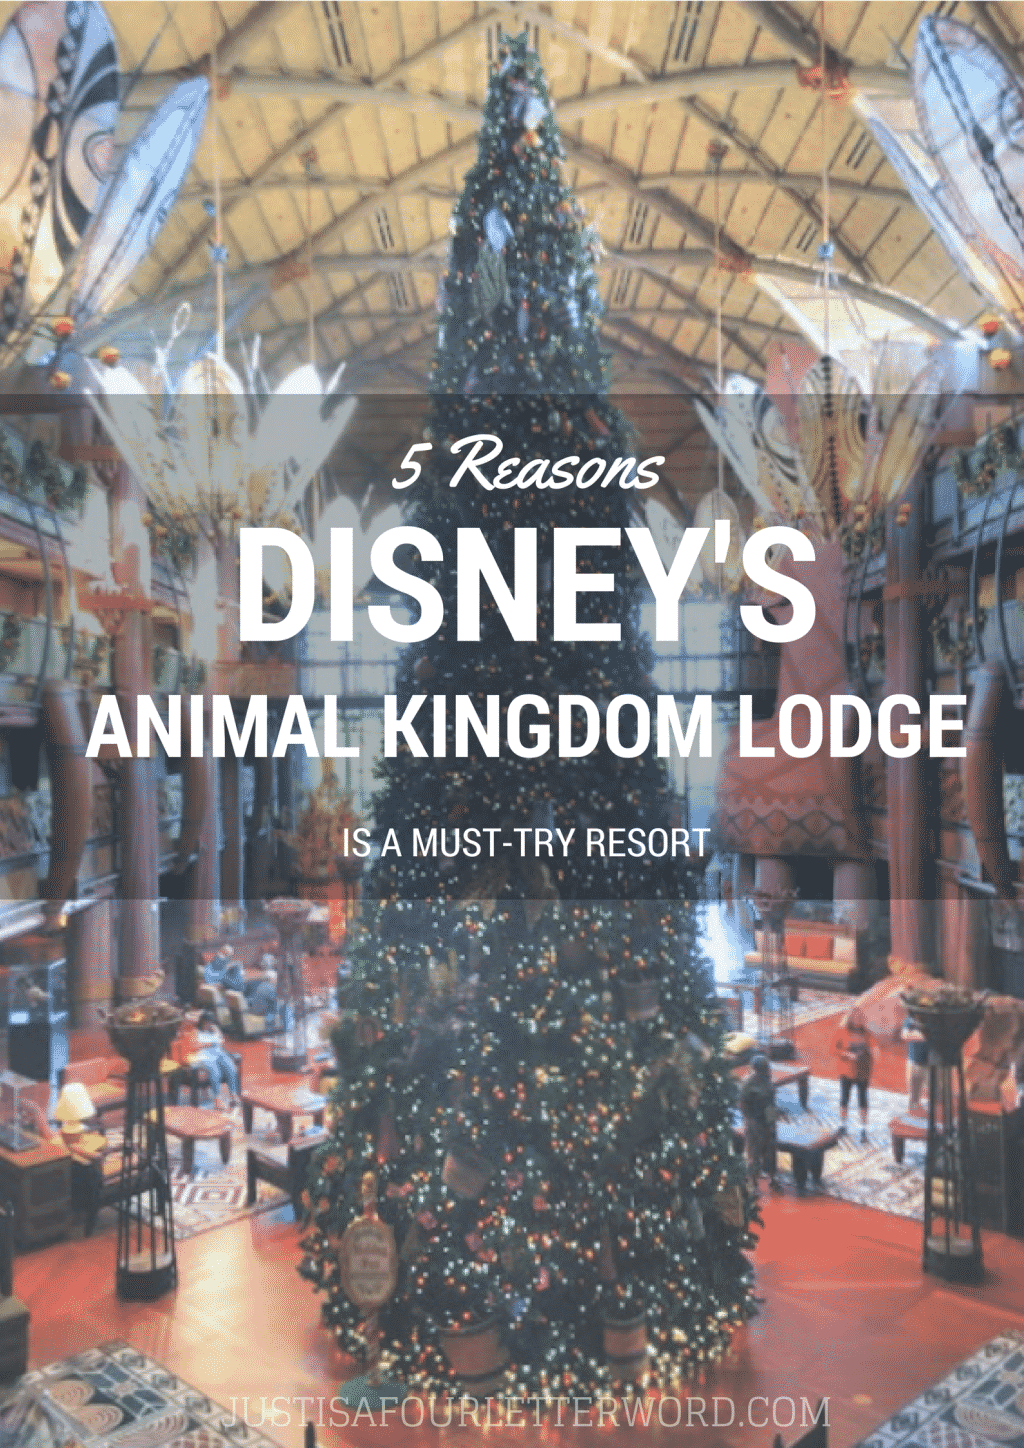 5 reasons Disney's Animal Kingdom Lodge is a must-try resort. 